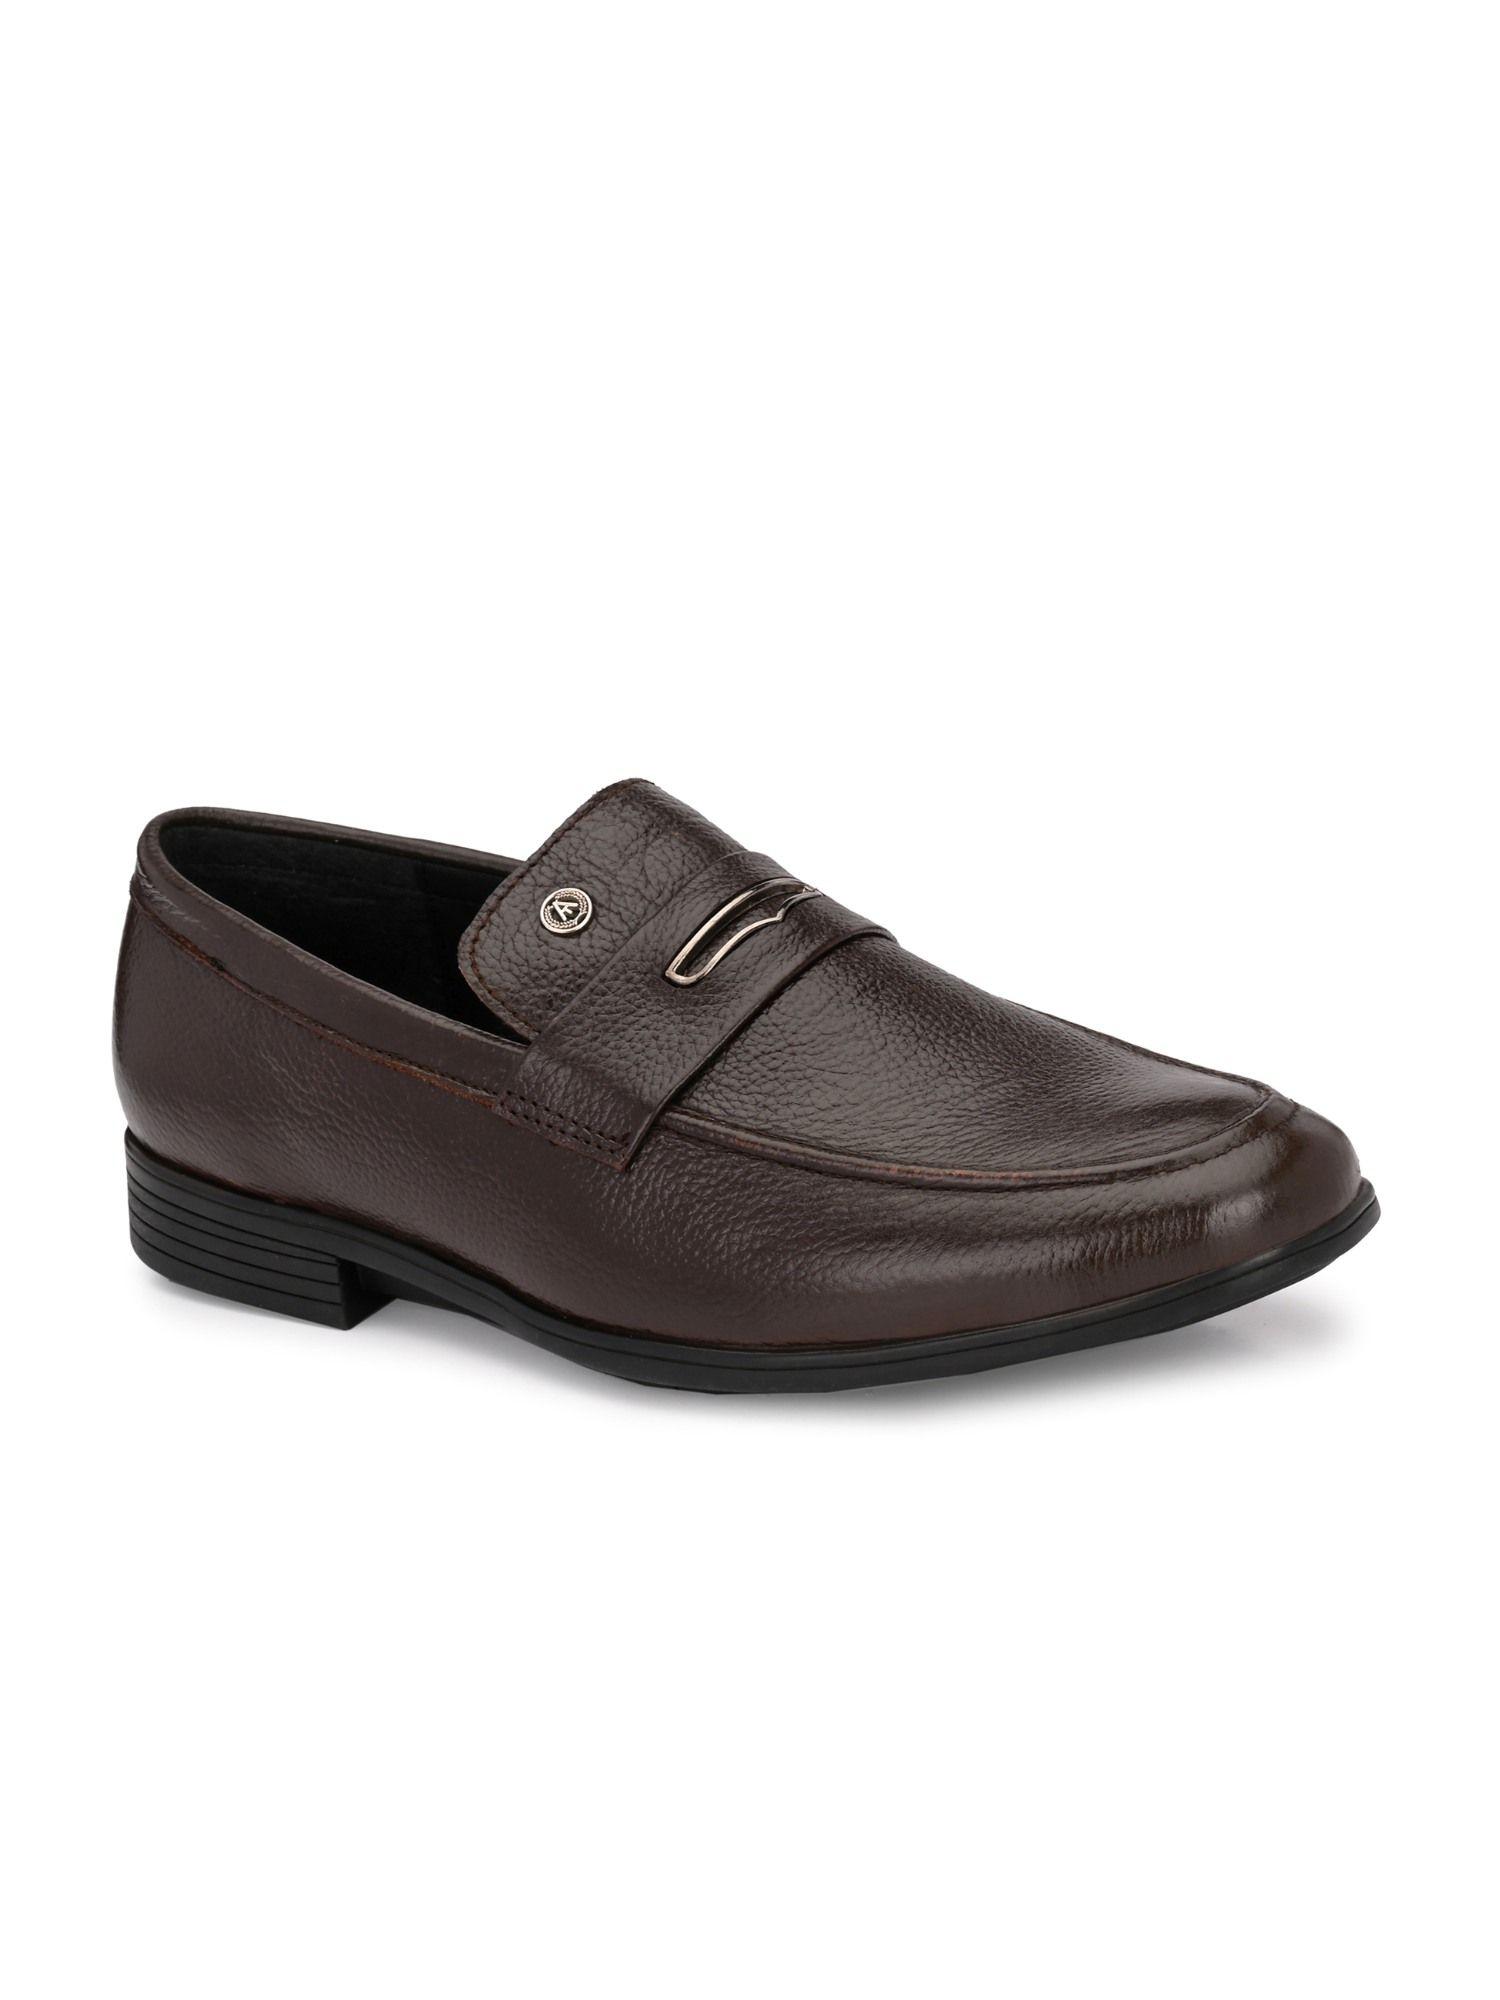 solid-genuine-leather-brown-slip-on-formal-shoes-for-men